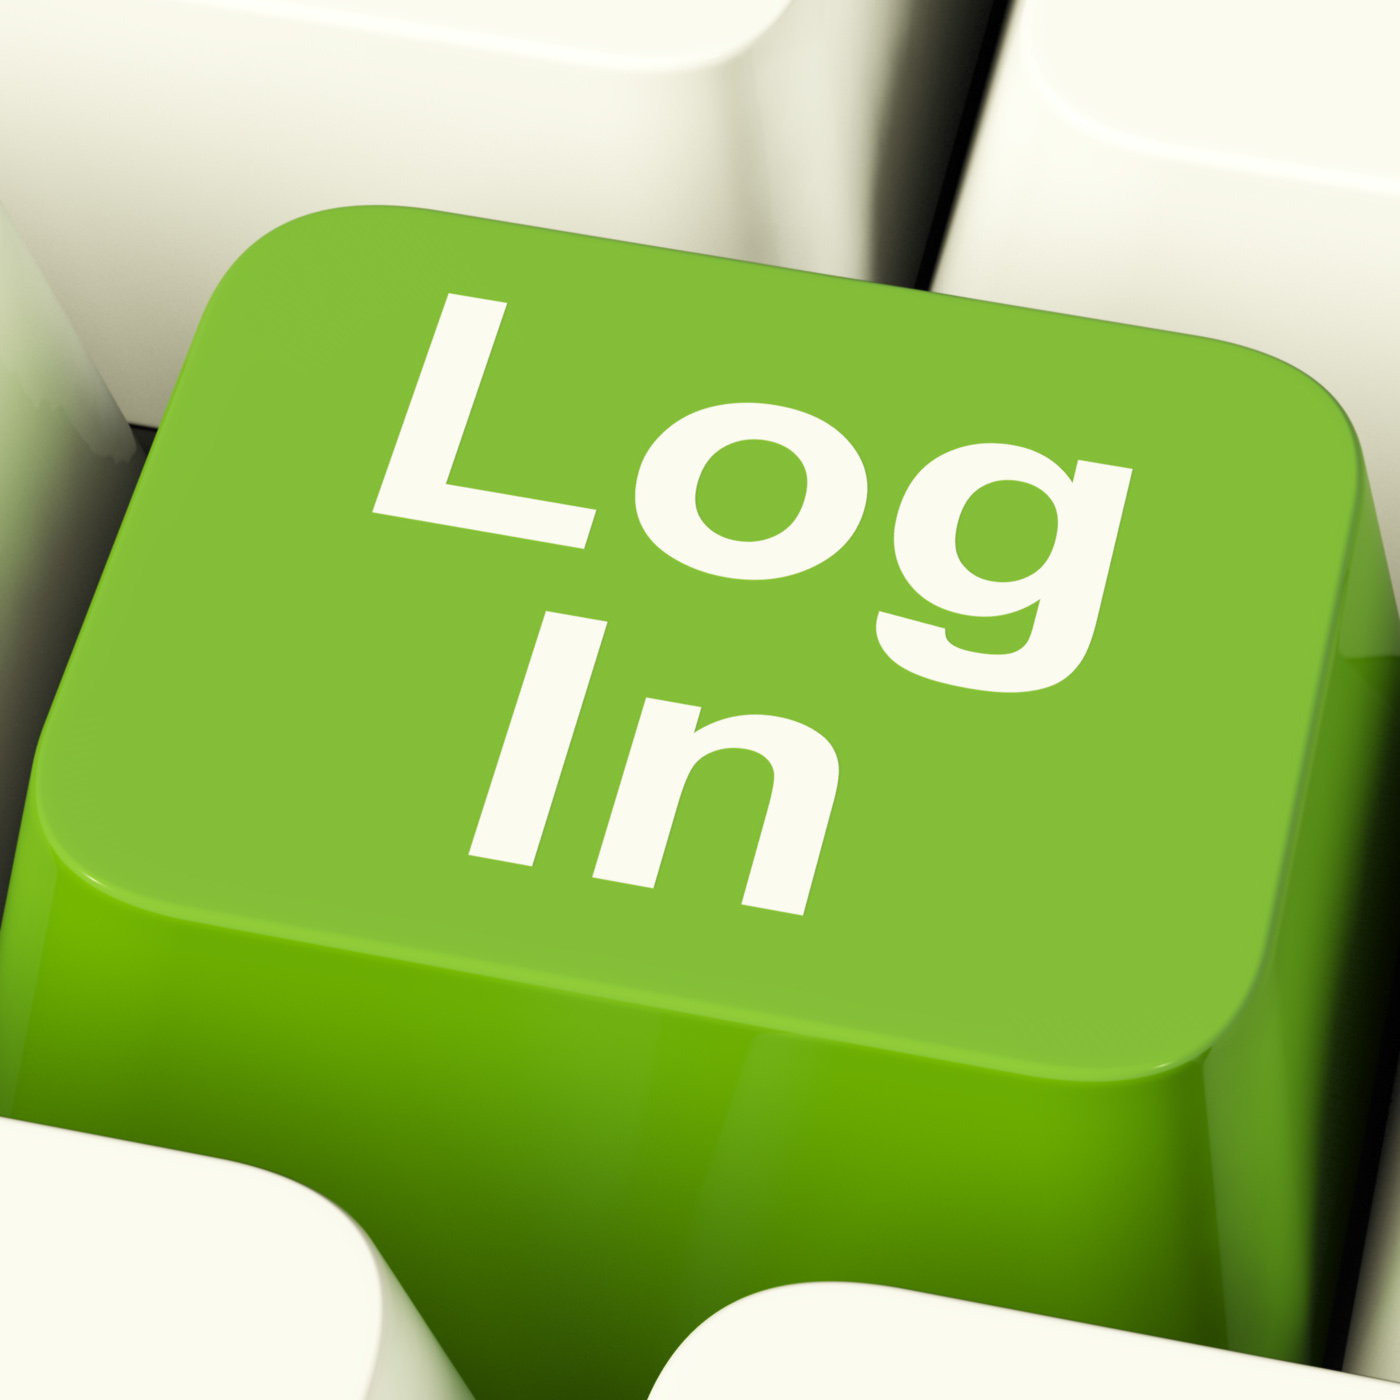 Login here. Log in. Log on image. Green Key. Log in you image.